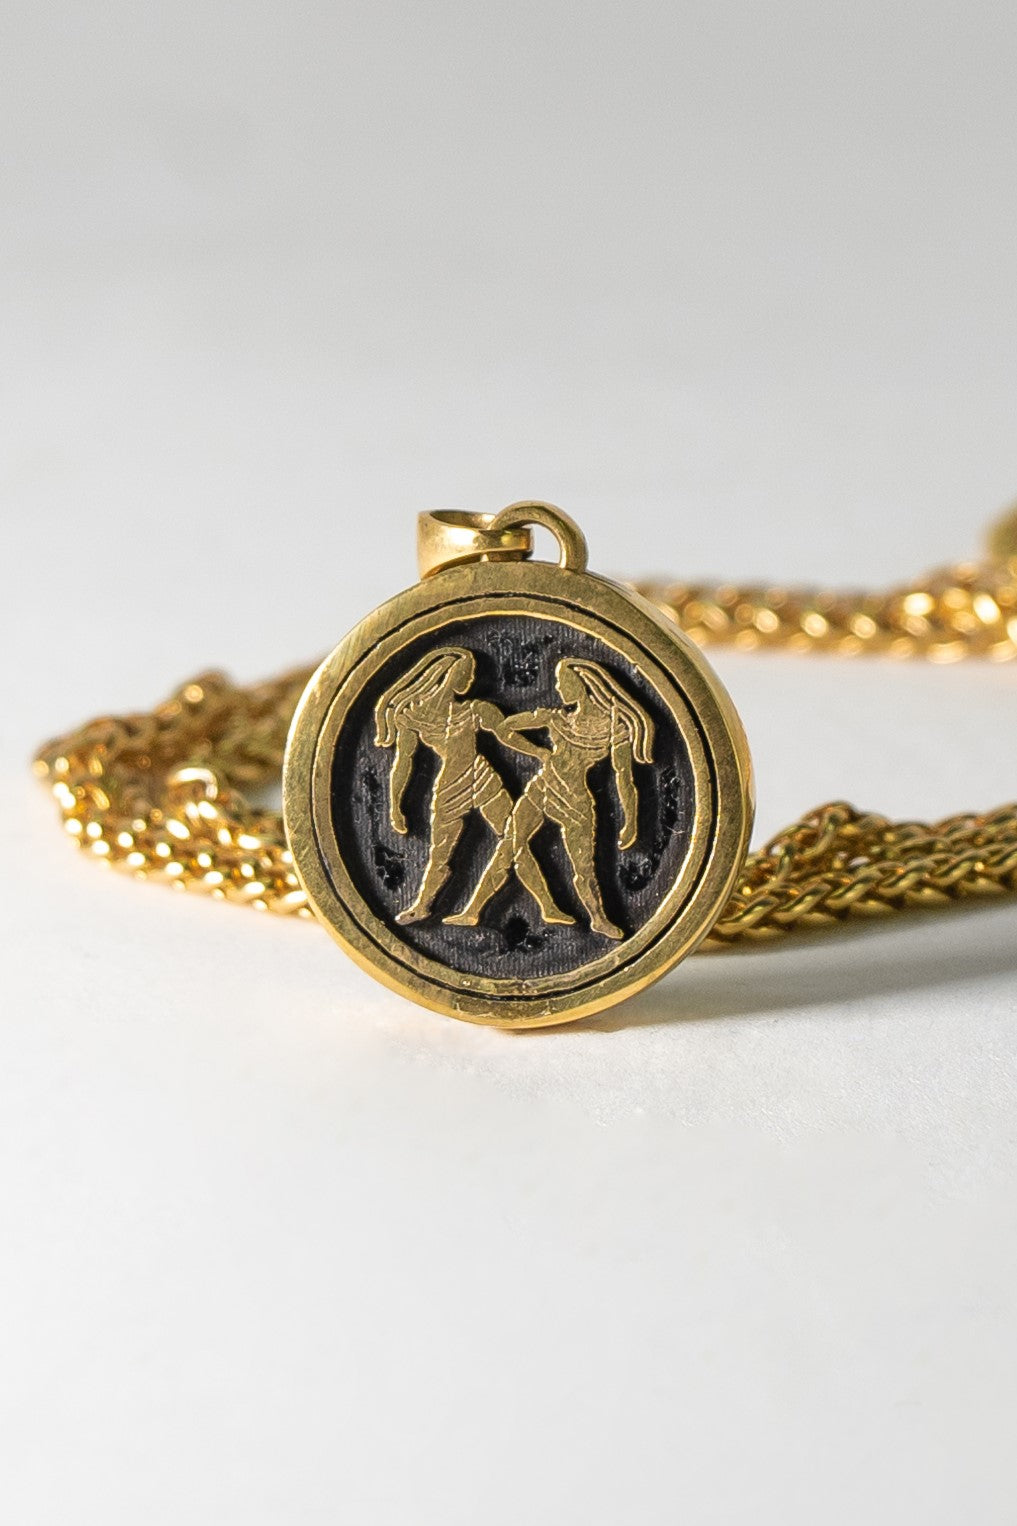 Gemini zodiac sign necklace